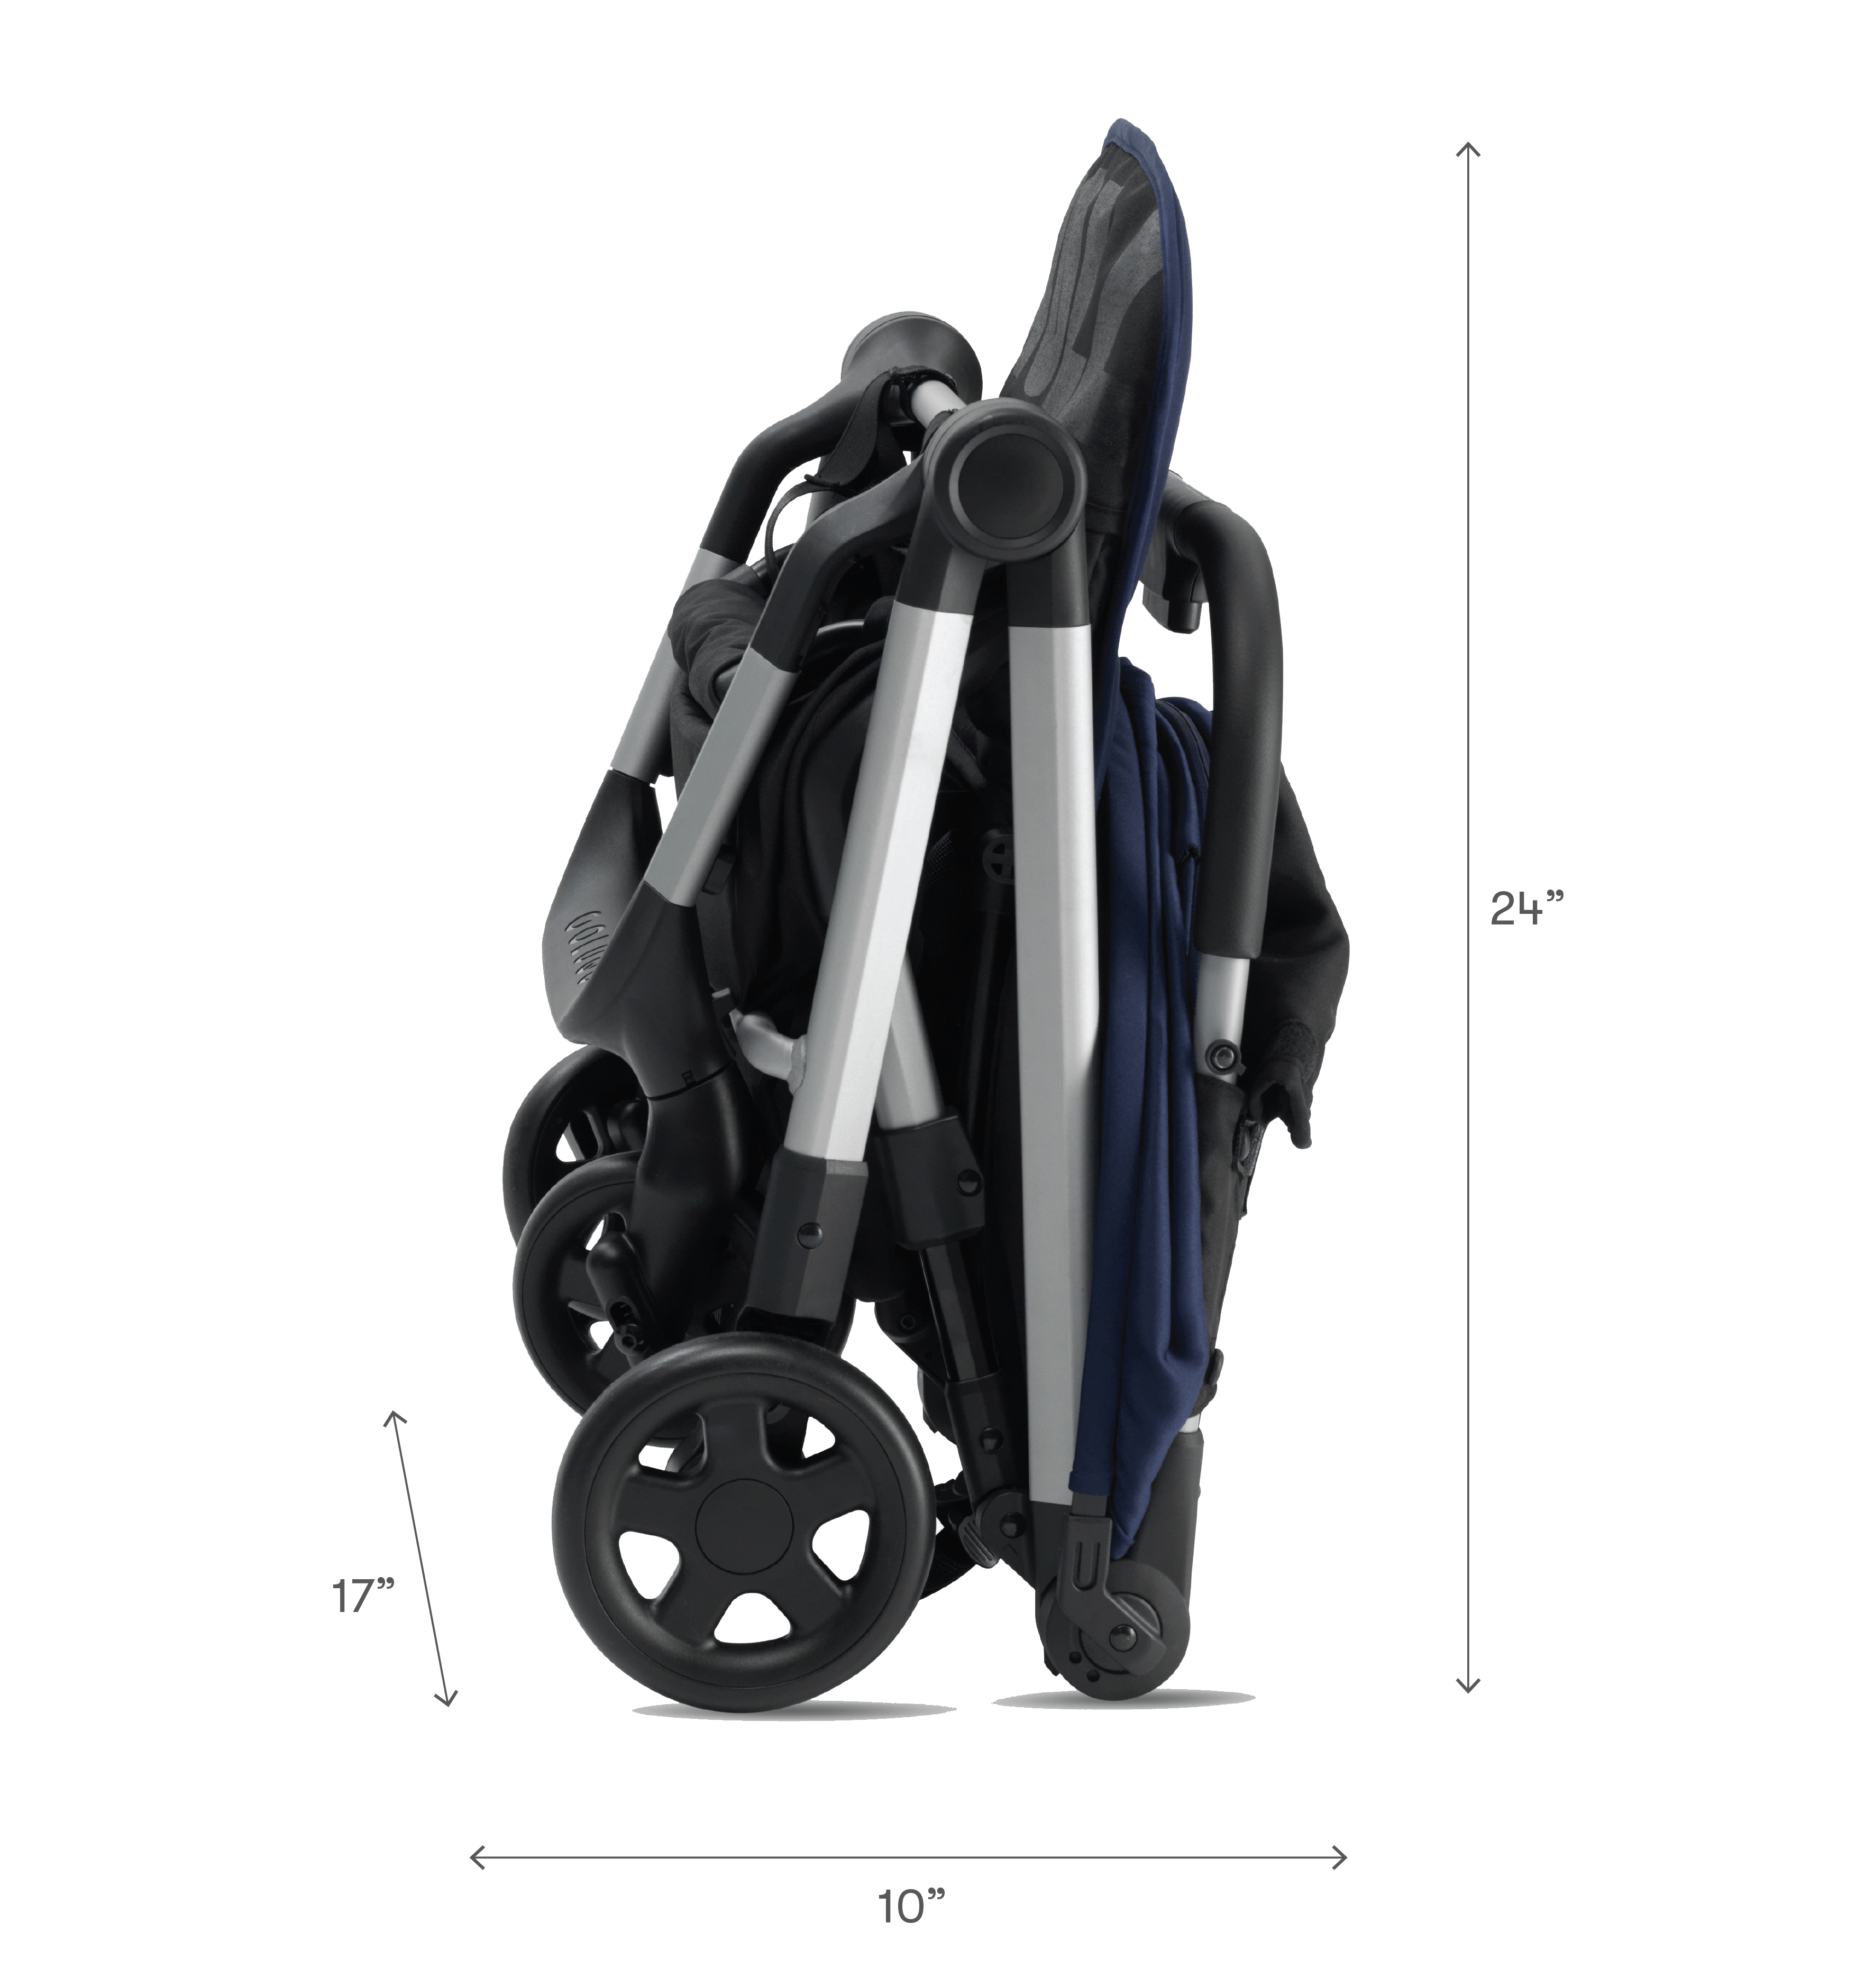 small fold stroller